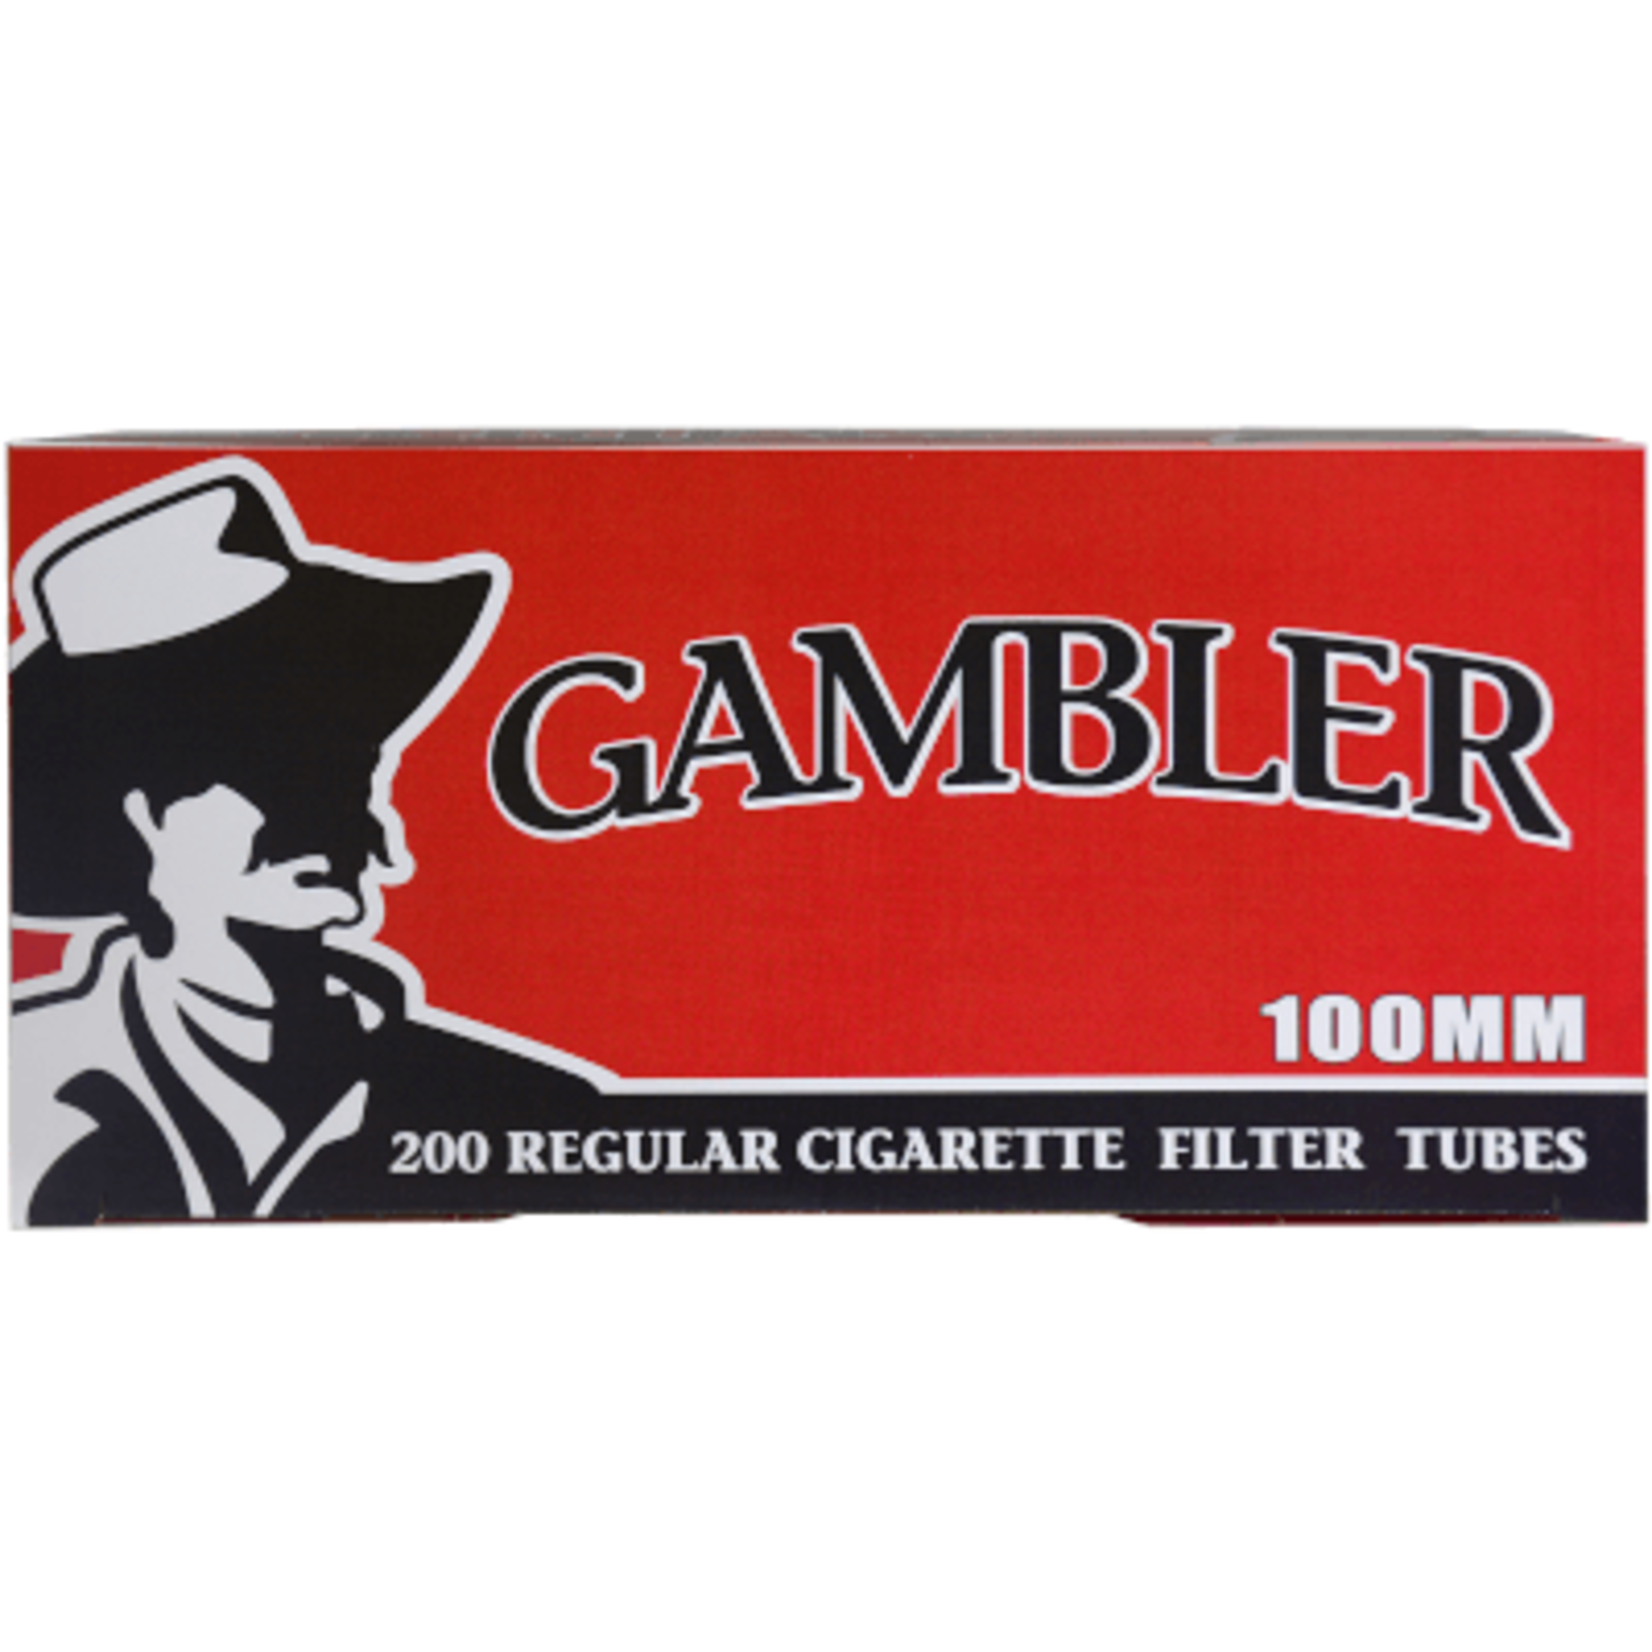 Gambler Gambler Cigarette Filter Tubes 200ct.